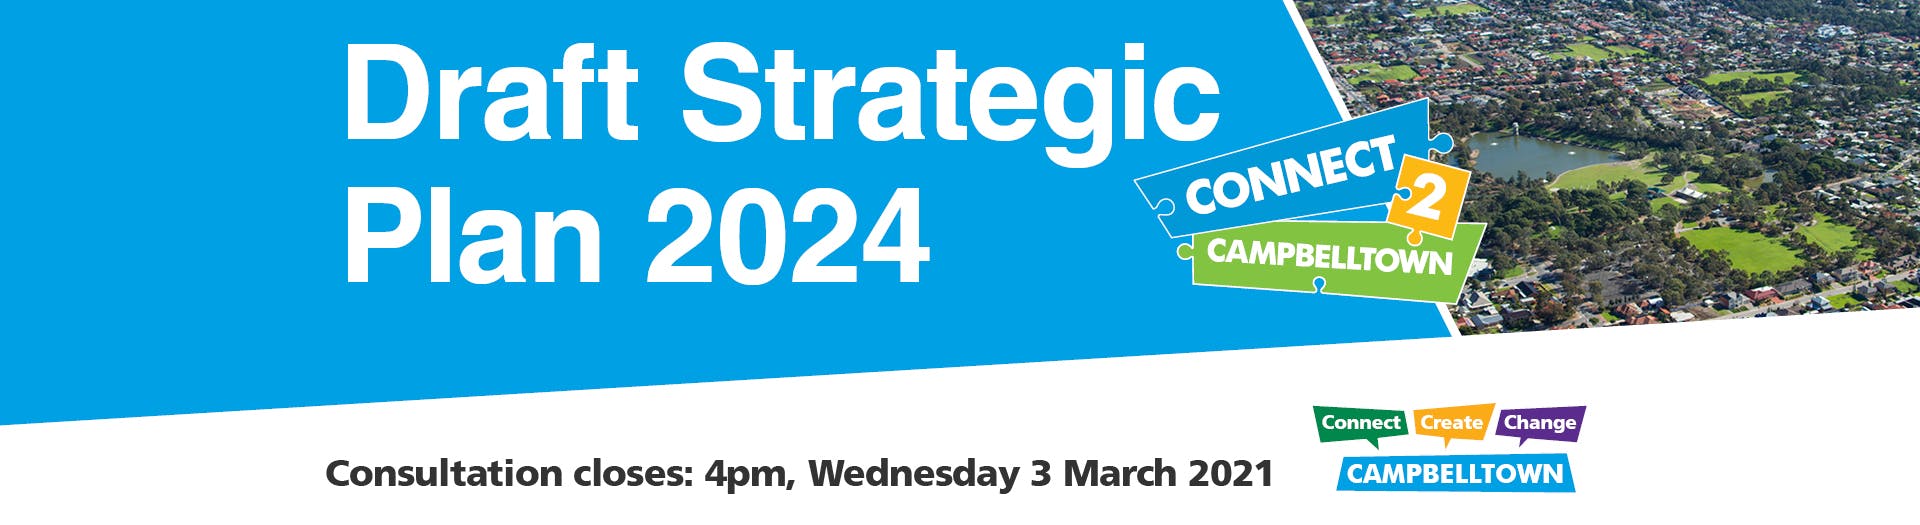 Strategic Plan 2024 Connect 2 Campbelltown